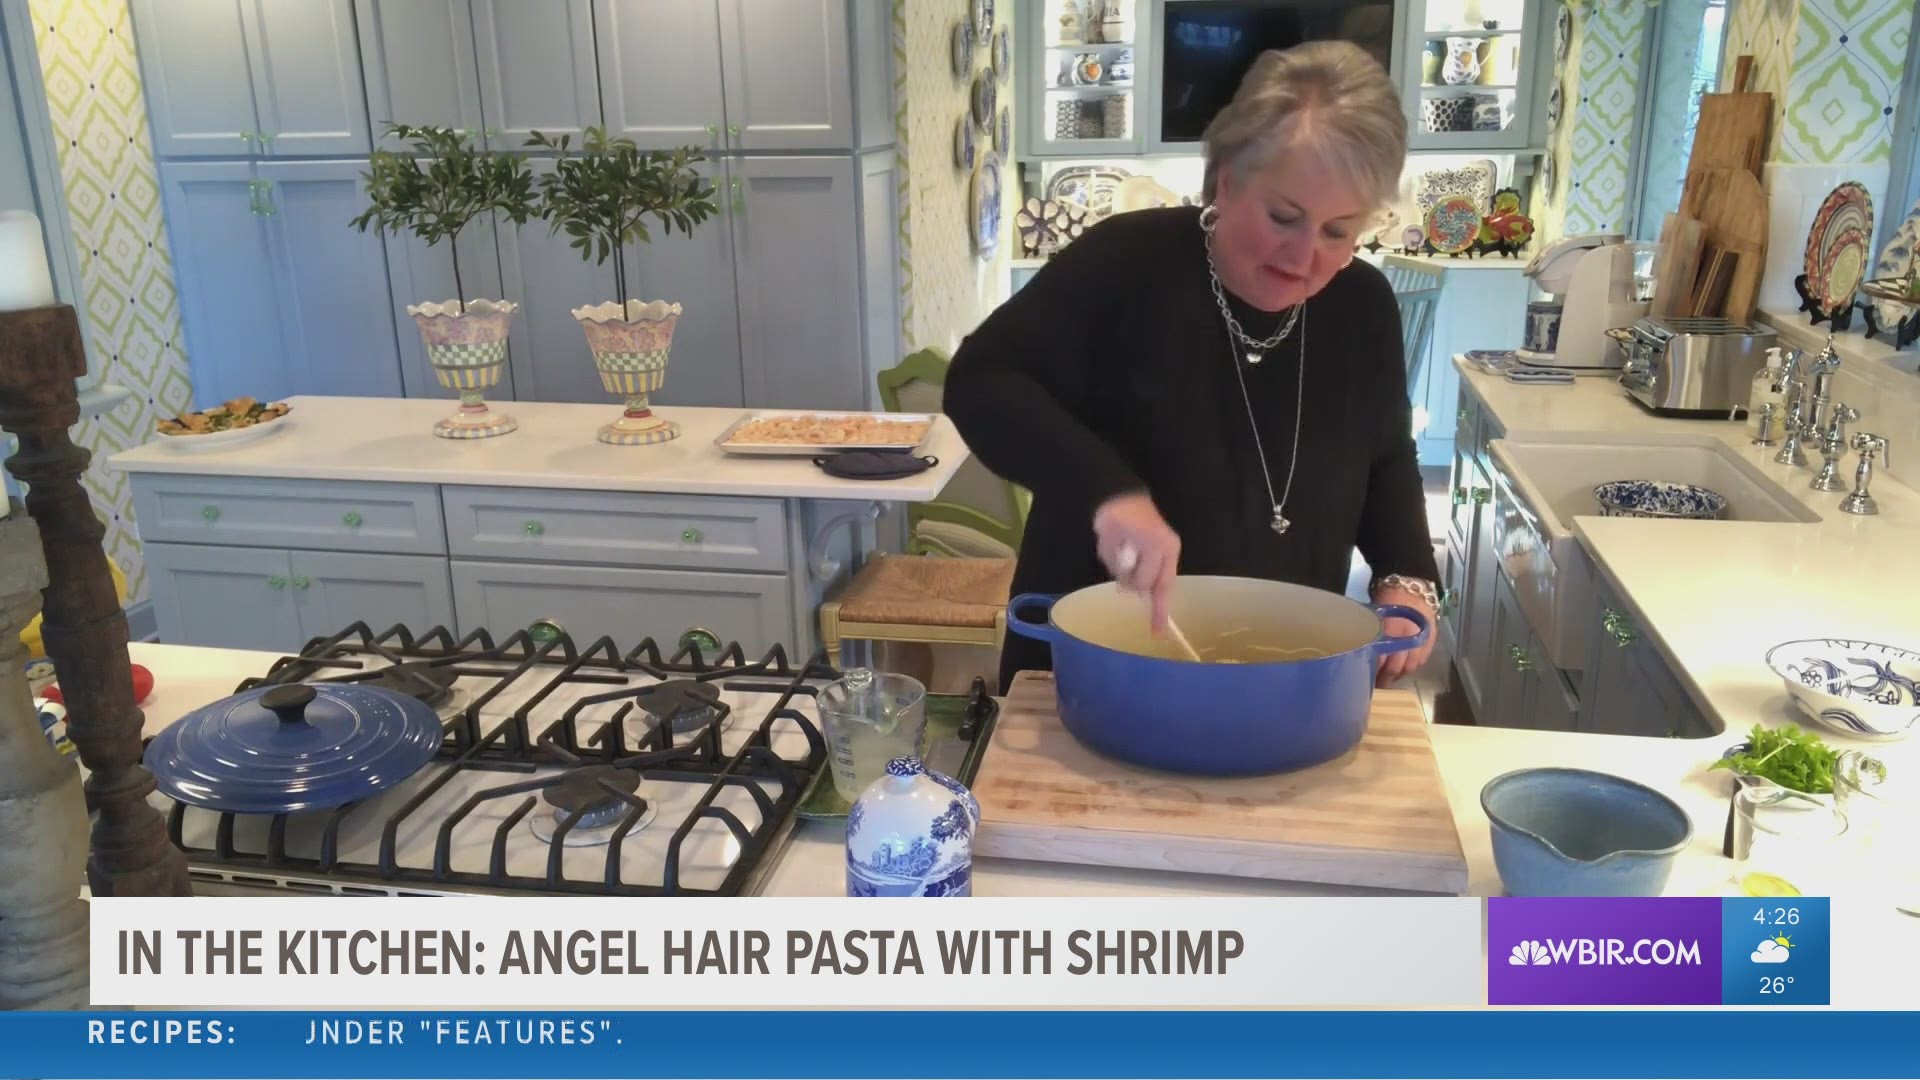 Joy McCabe shares her Angel Hair Pasta with shrimp recipe.